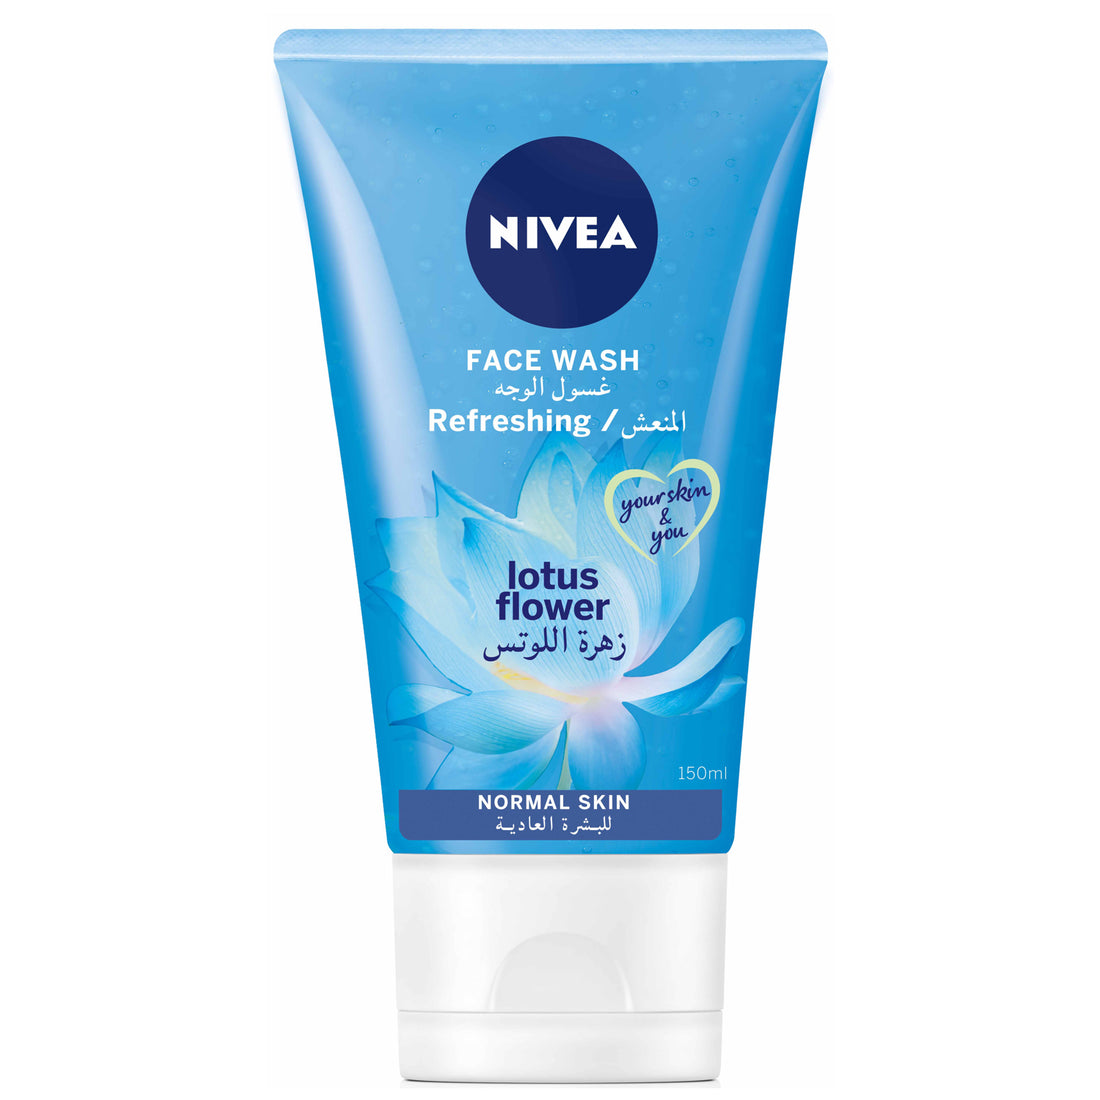 Nivea Refreshing Face Wash, Normal Skin, 150ml